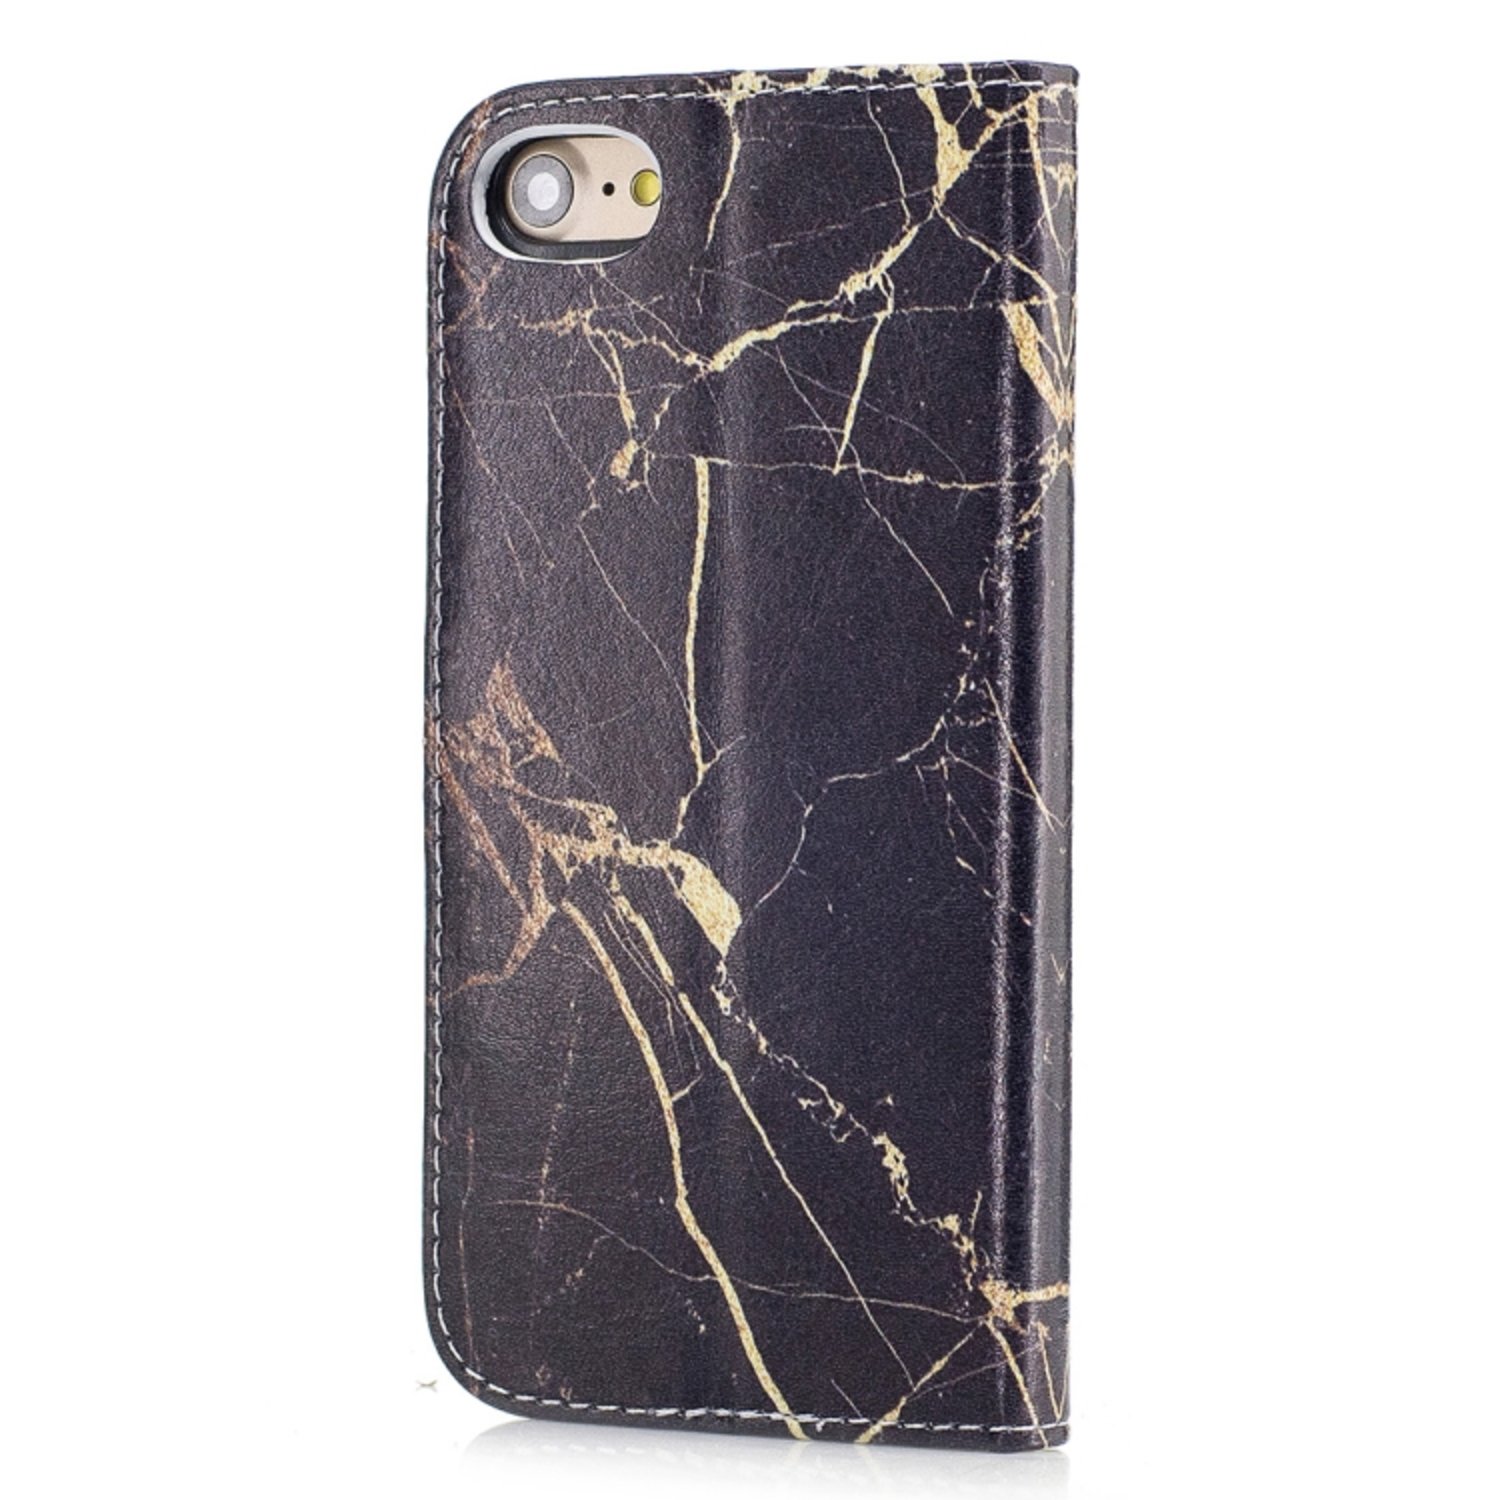 Plånbok i marmor för iPhone 7/8